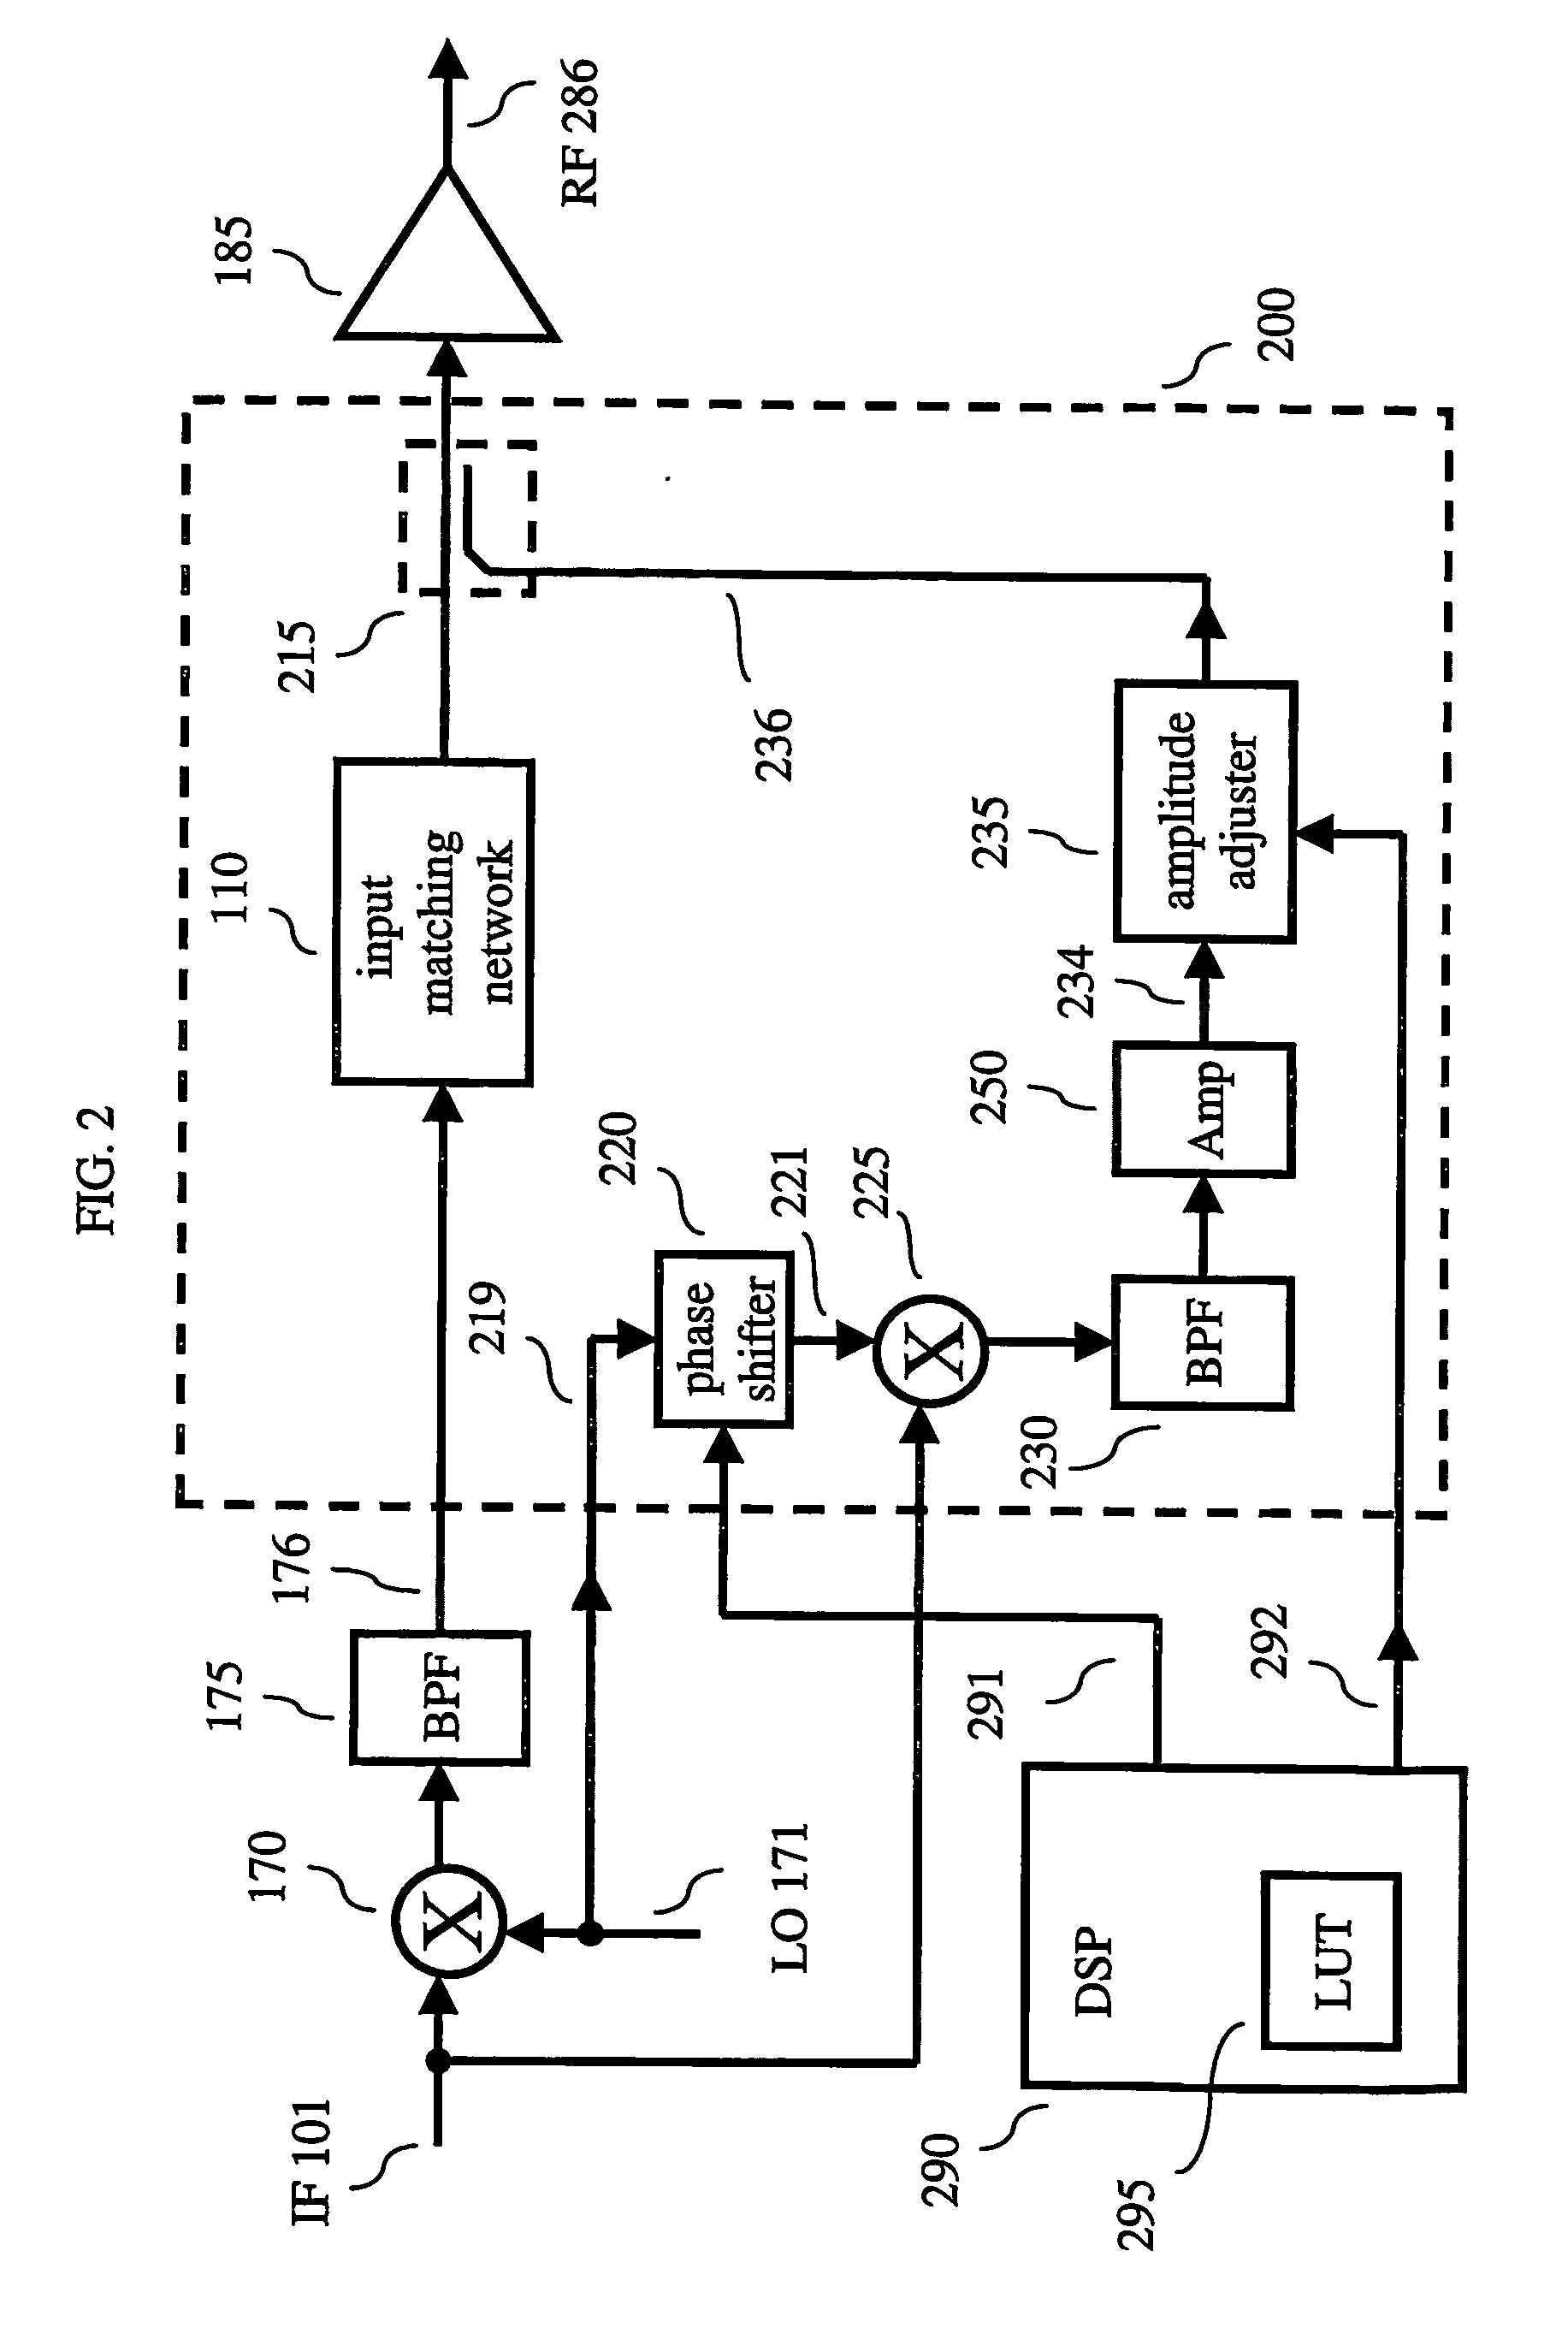 Predistorter for use in a wireless transmitter